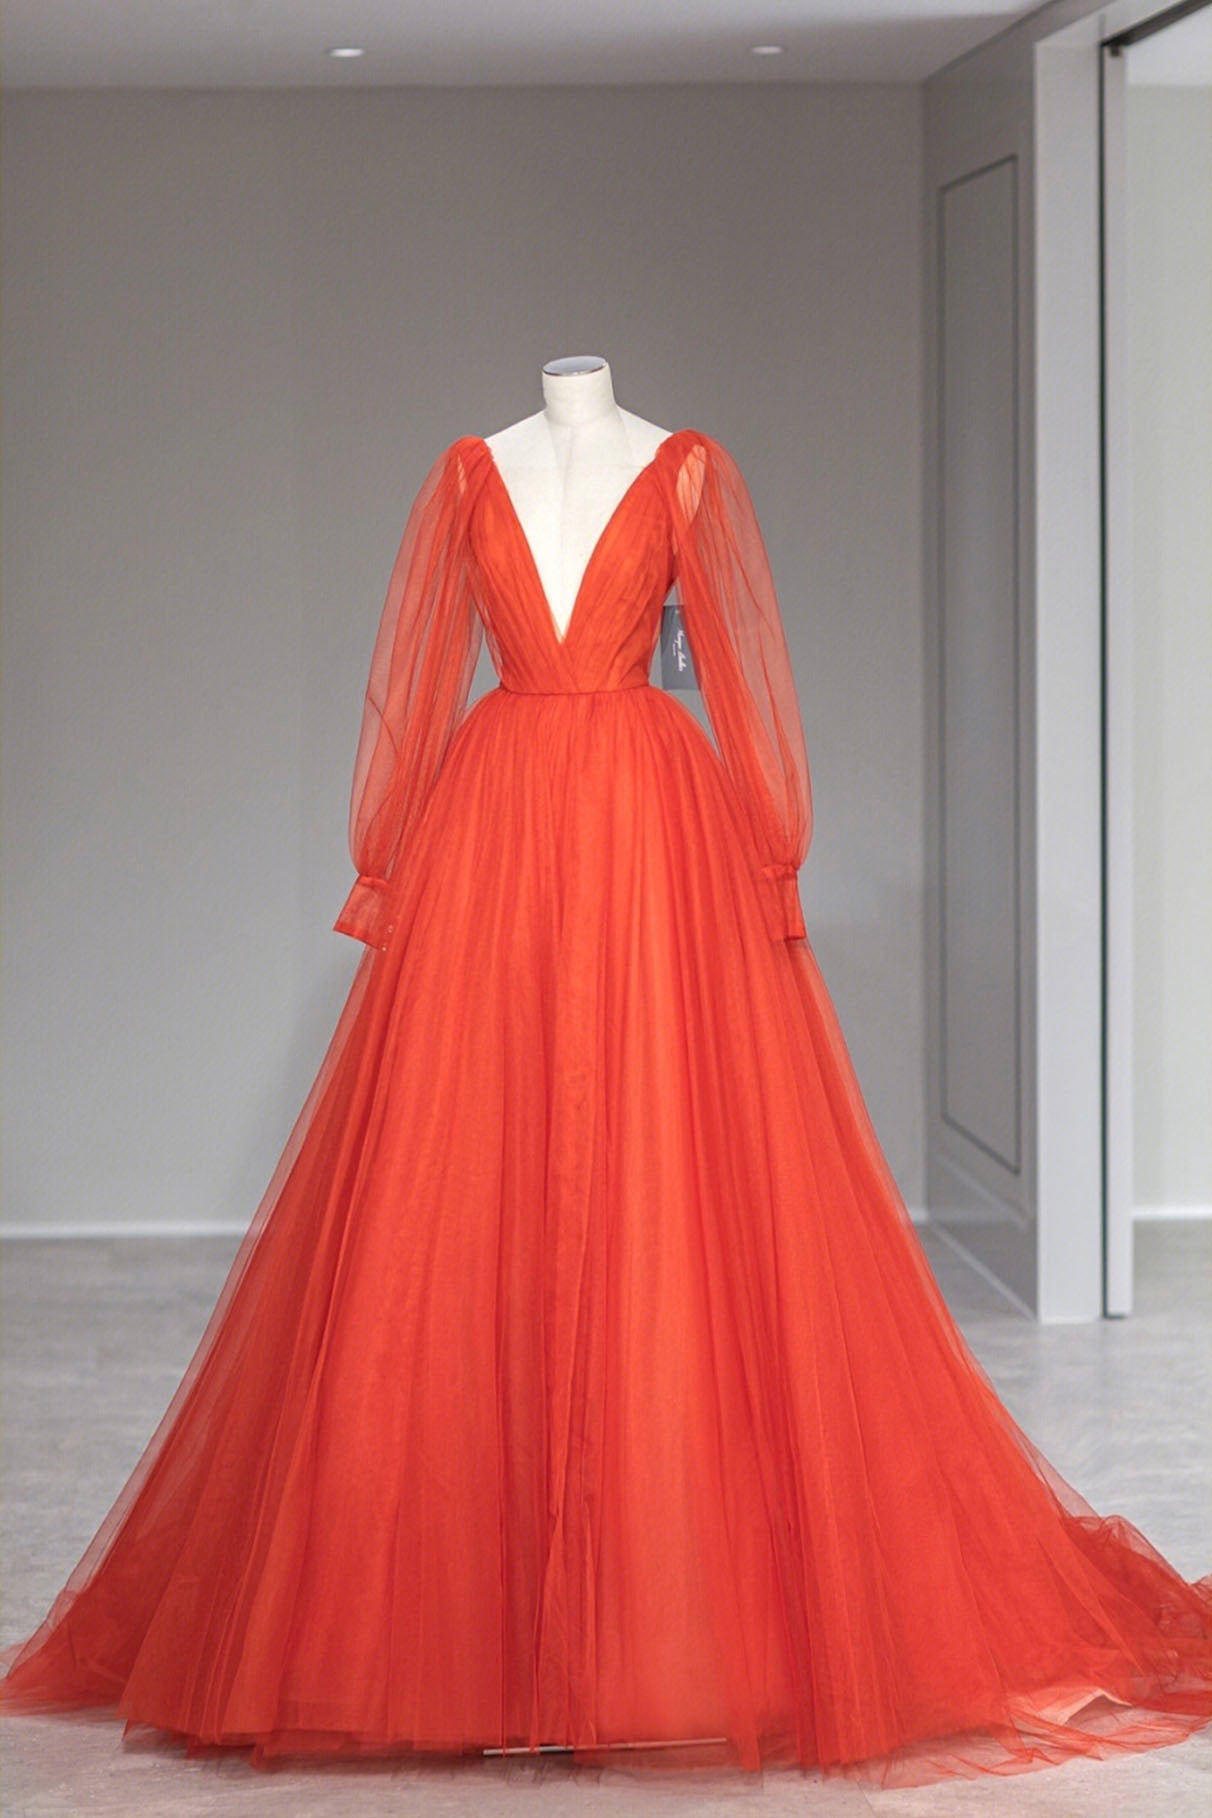 Plunging V-Neck Tulle Floor Length Formal Dress Outfits For Girls, Orange Long Sleeve Prom Dress